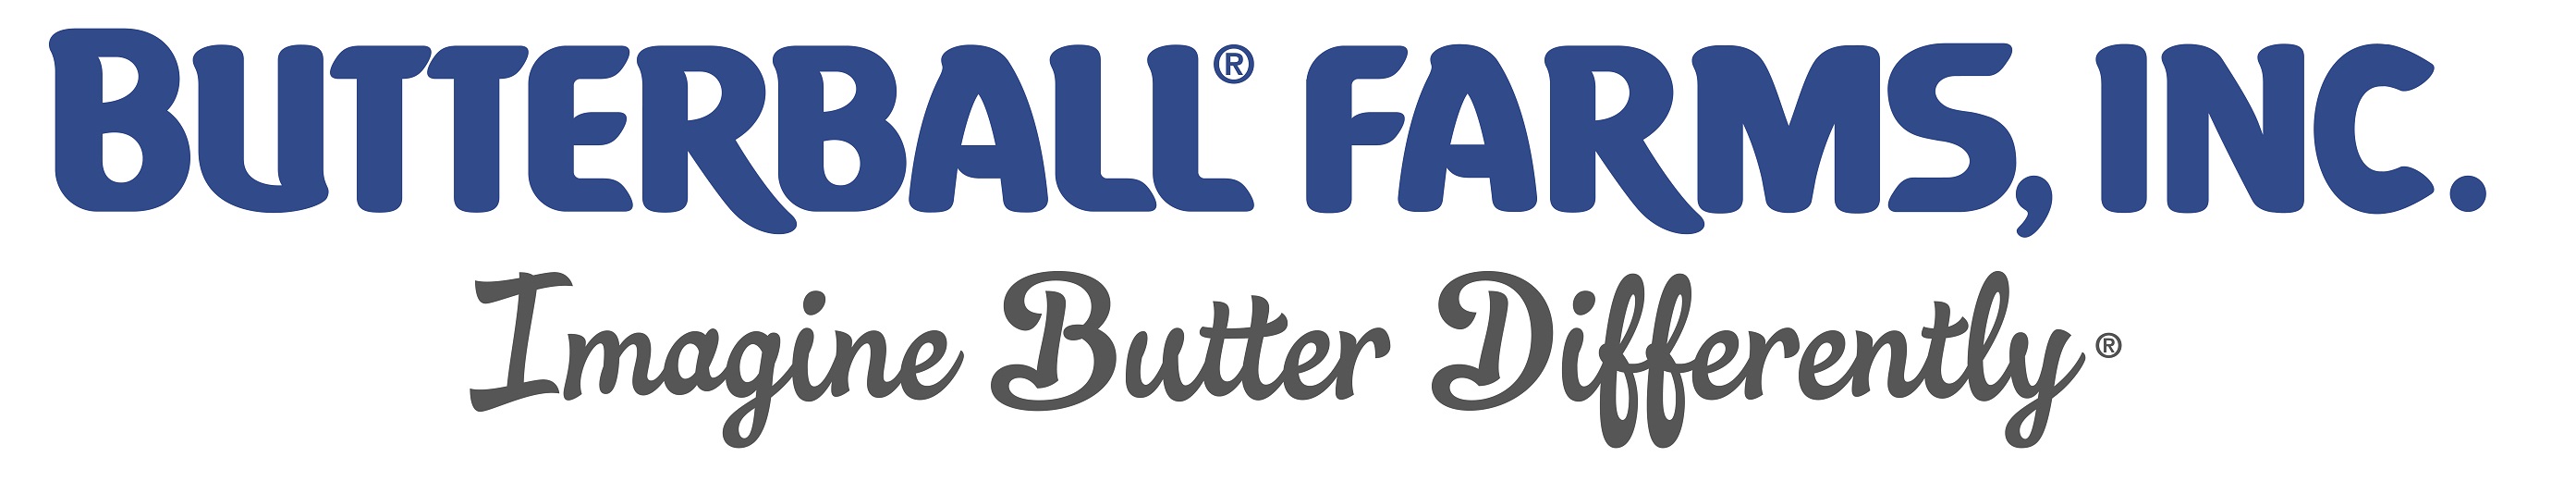 Butterball Farms